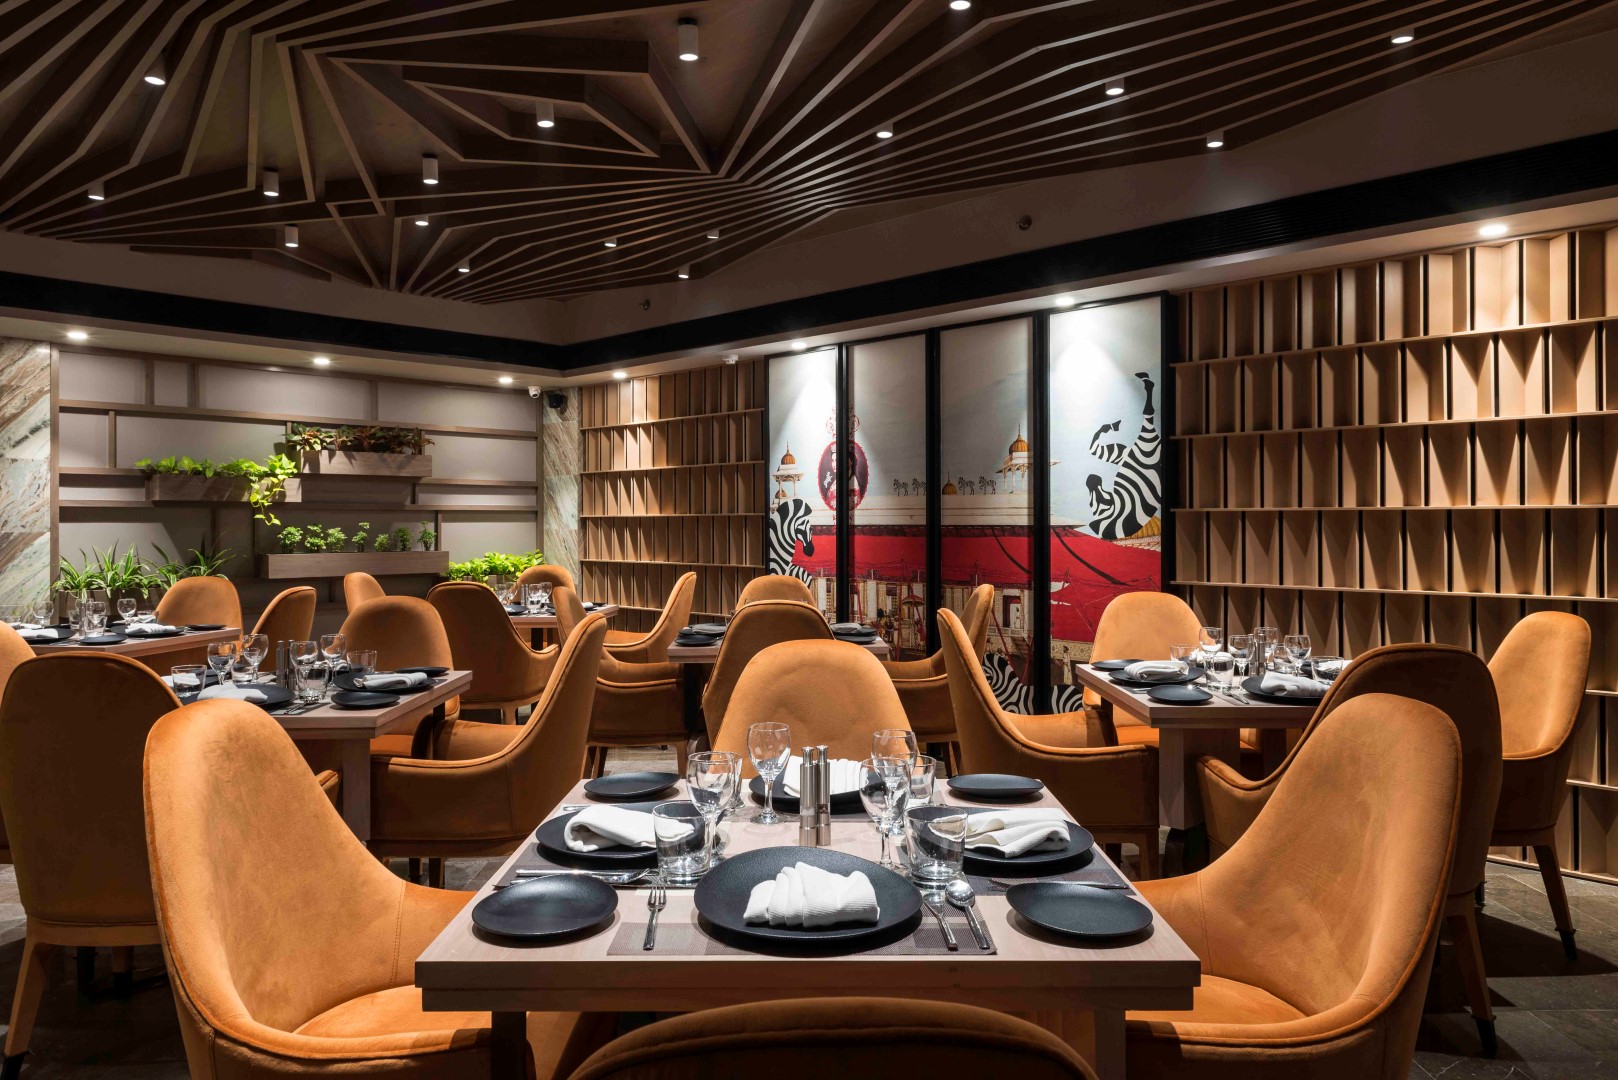 Middle Eastern Culture on Dubai Restaurant Interiors